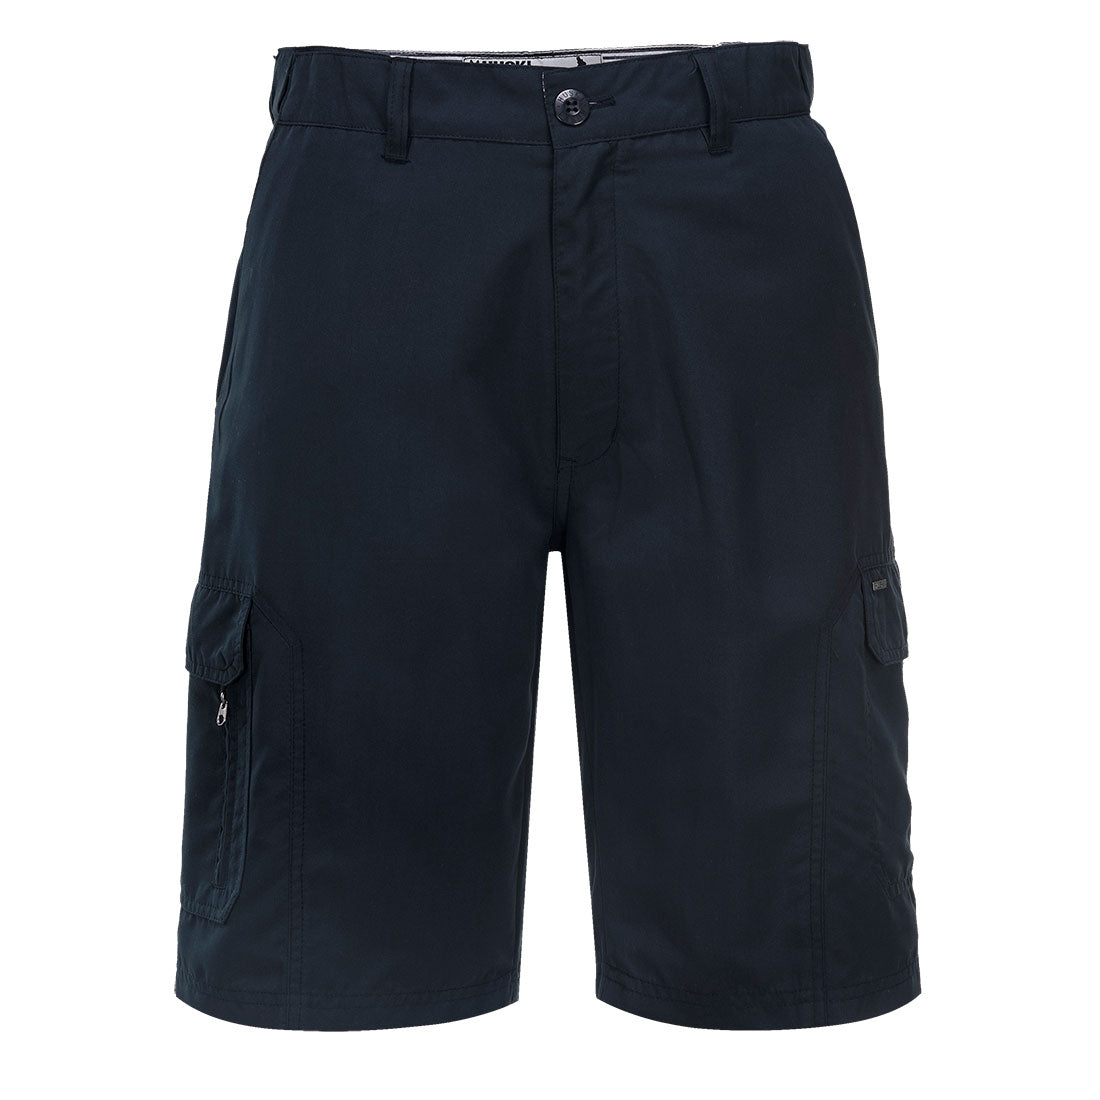 Portwest Huski Cascade Mens Shorts (K5206)